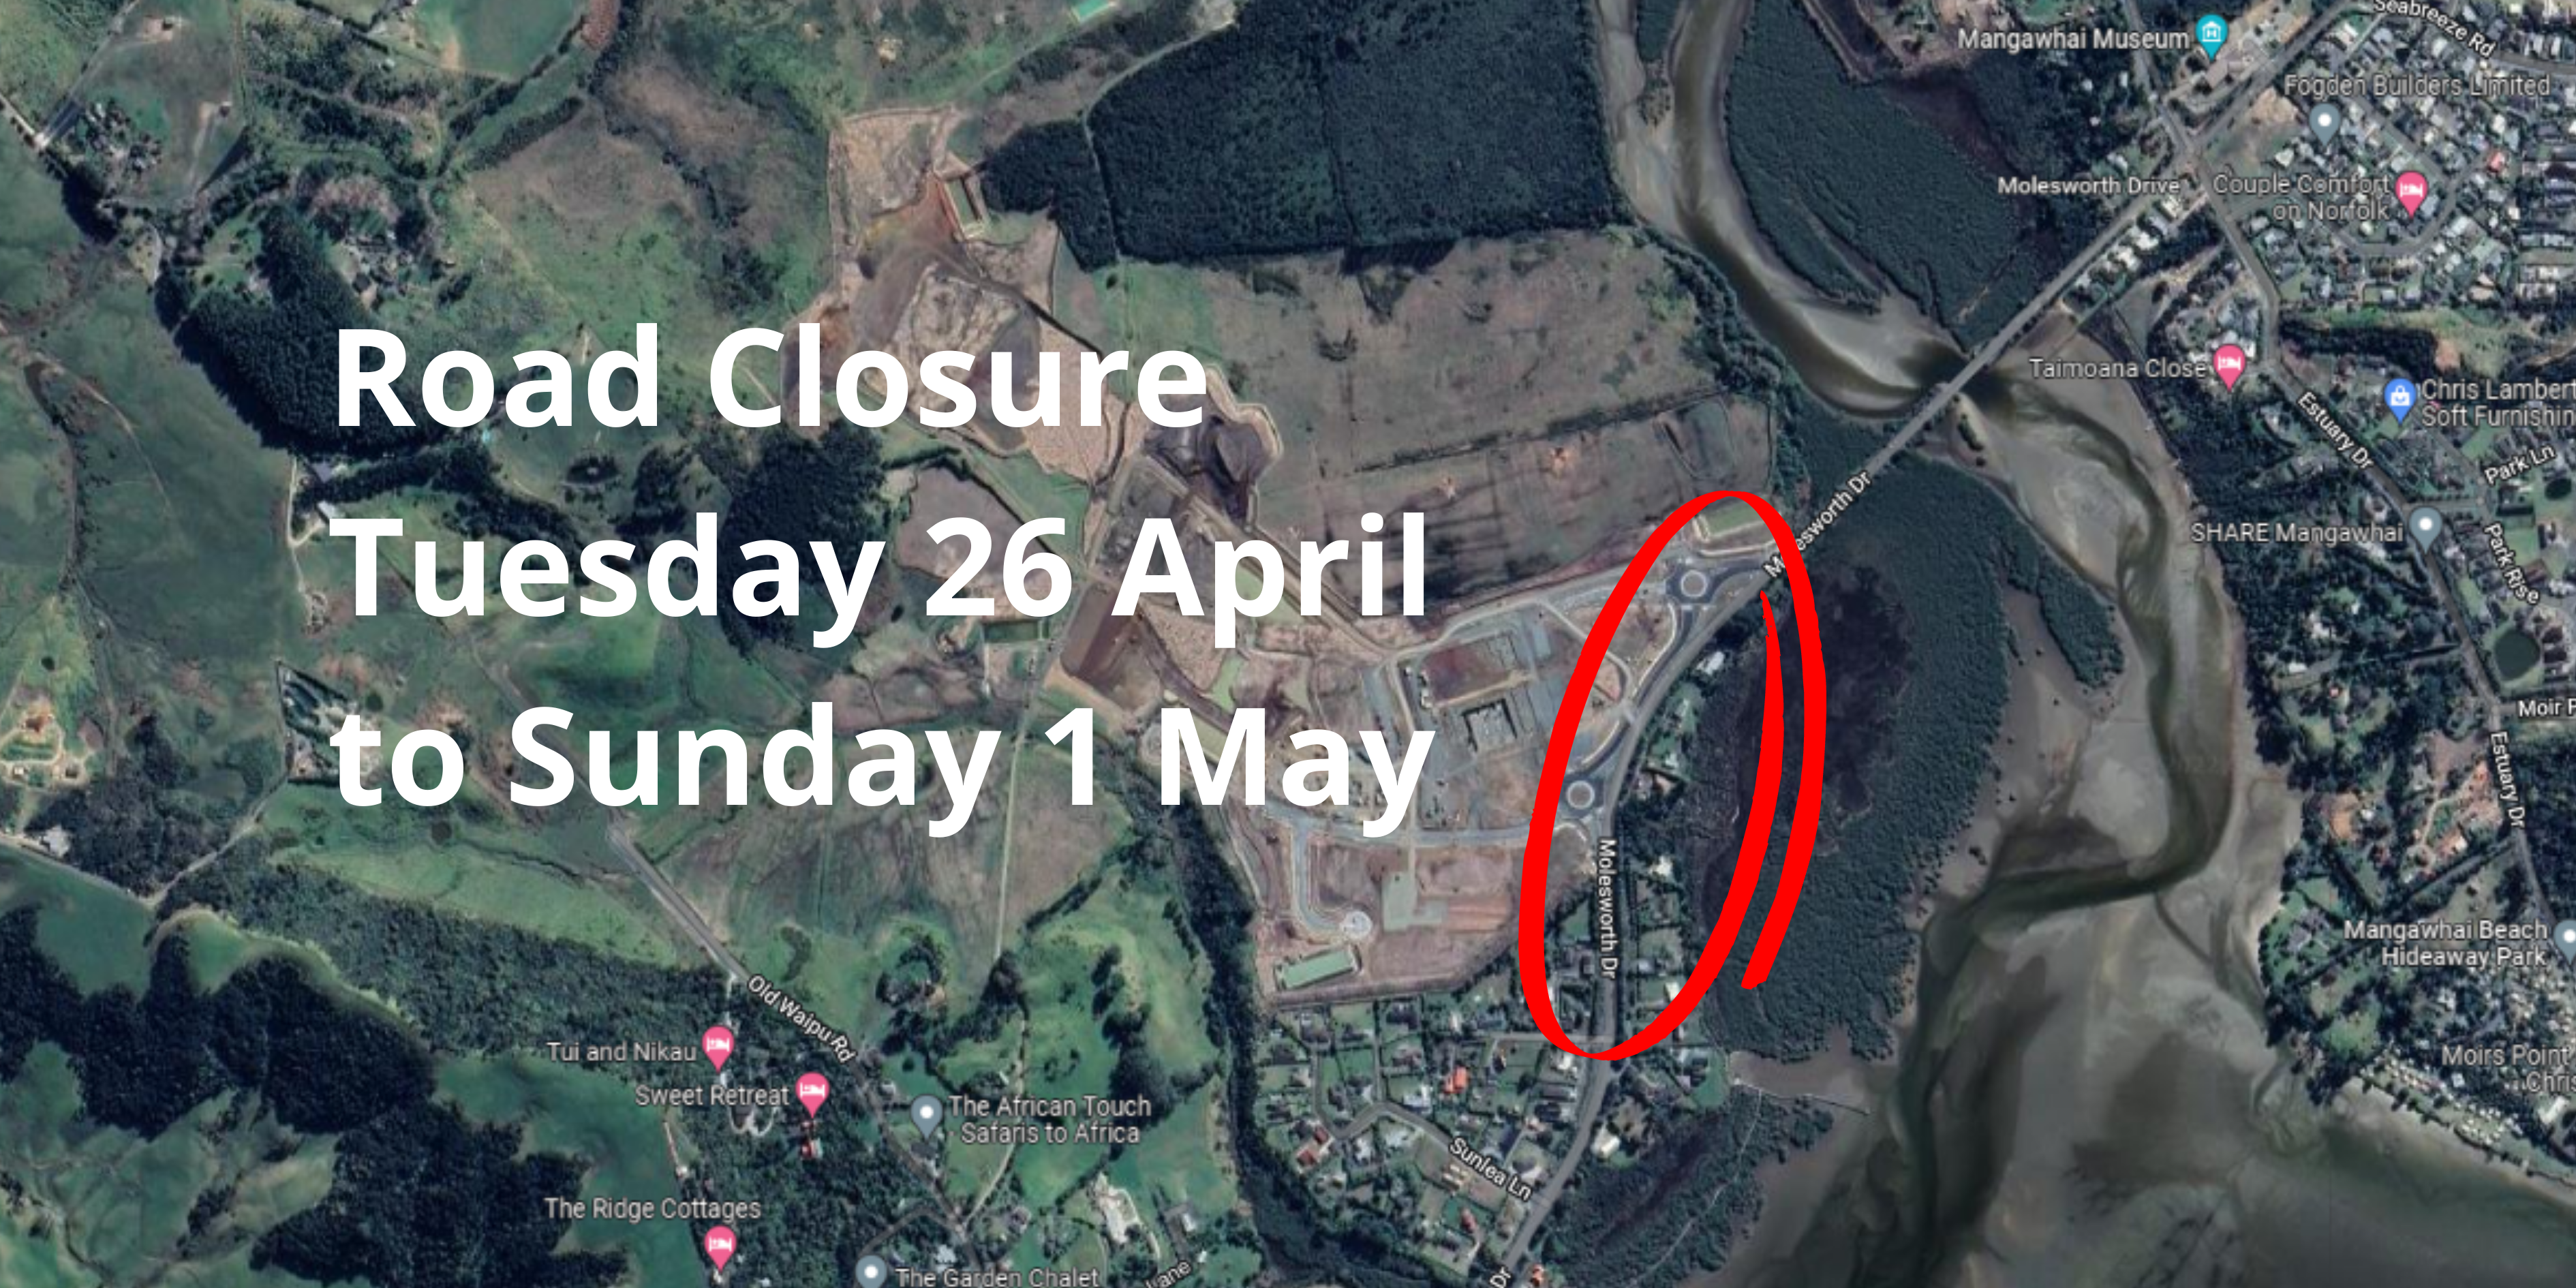 Molesworth Drive Road Closure Tues 26 April to Sunday 1 May